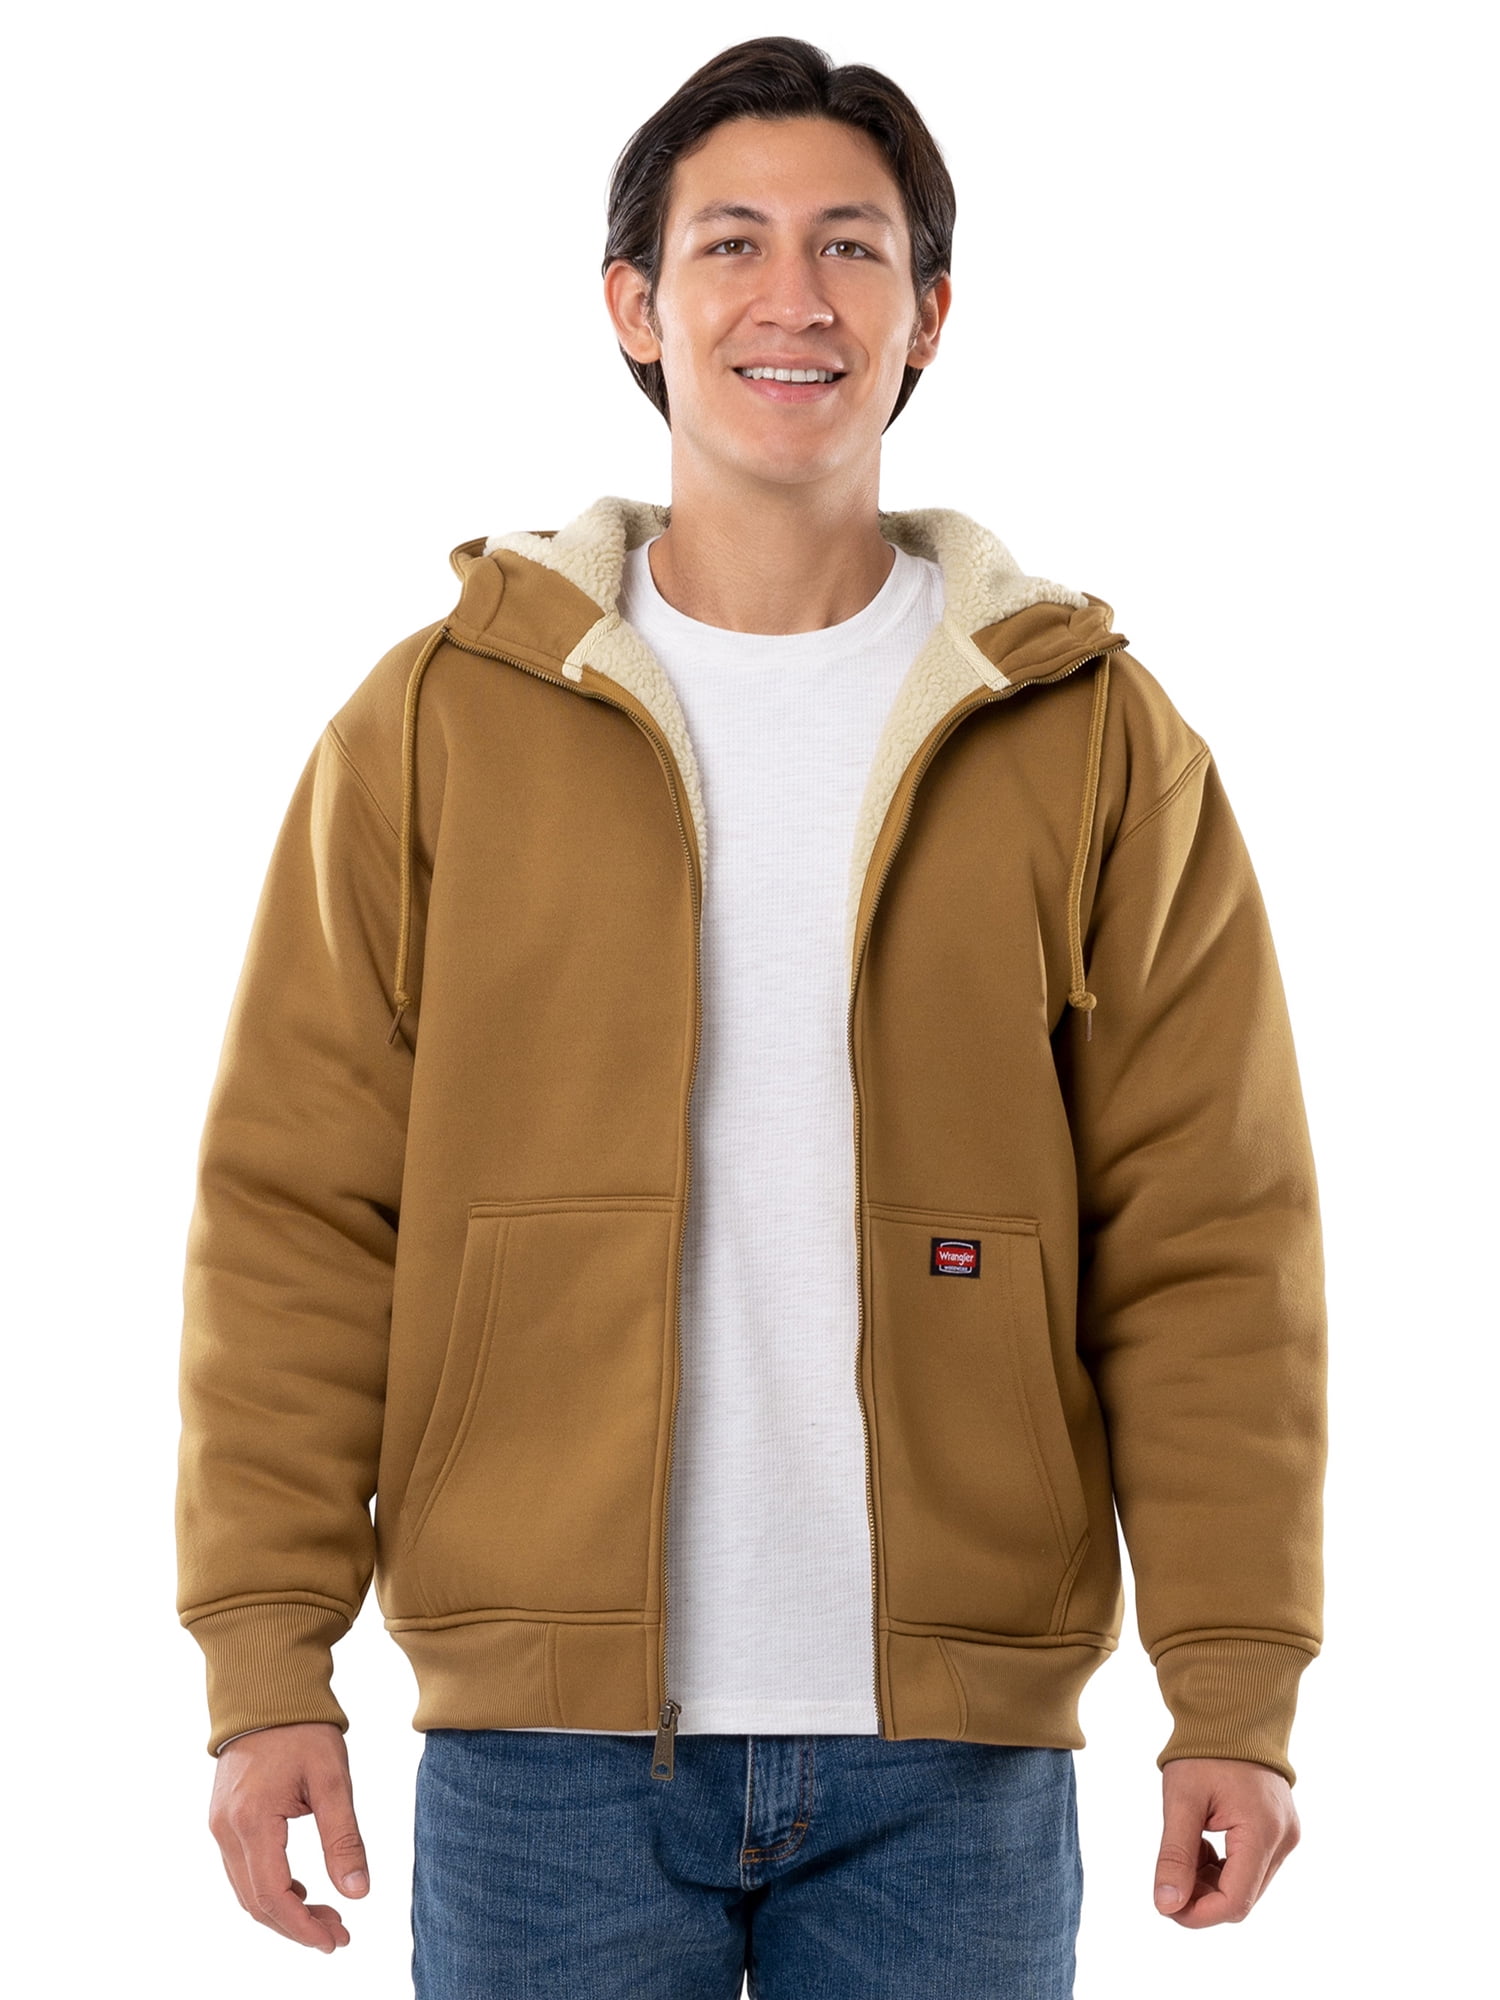 Wrangler Workwear Men's Full-Zip Hooded Work Jacket, Size Small to 3XL  (Men's and Big Men's)